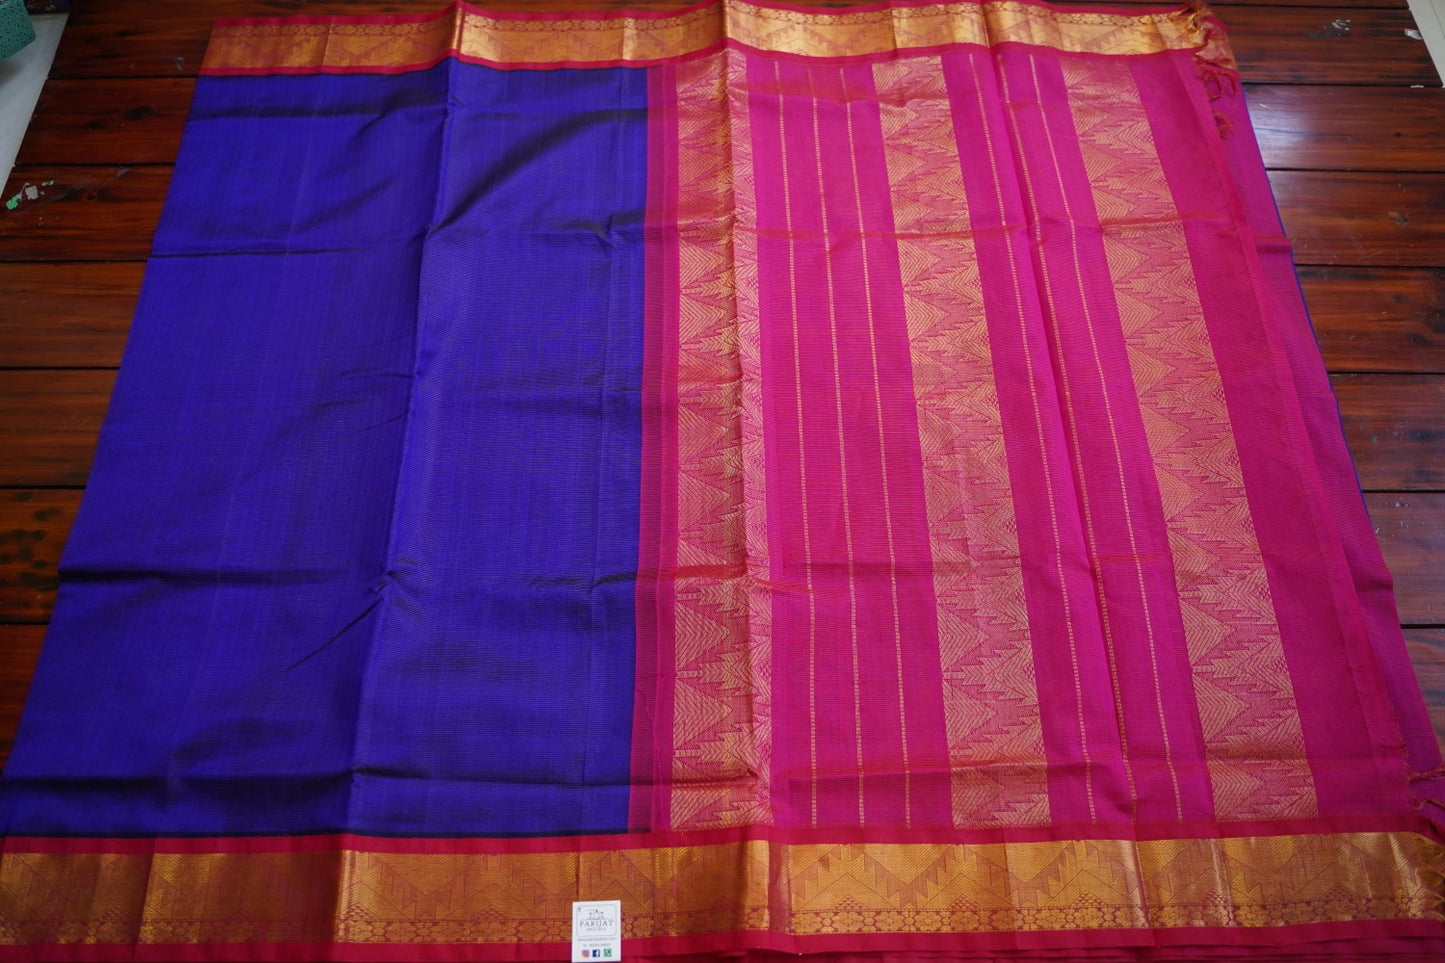 Kanchi Handloom Silk Cotton Saree PC12066